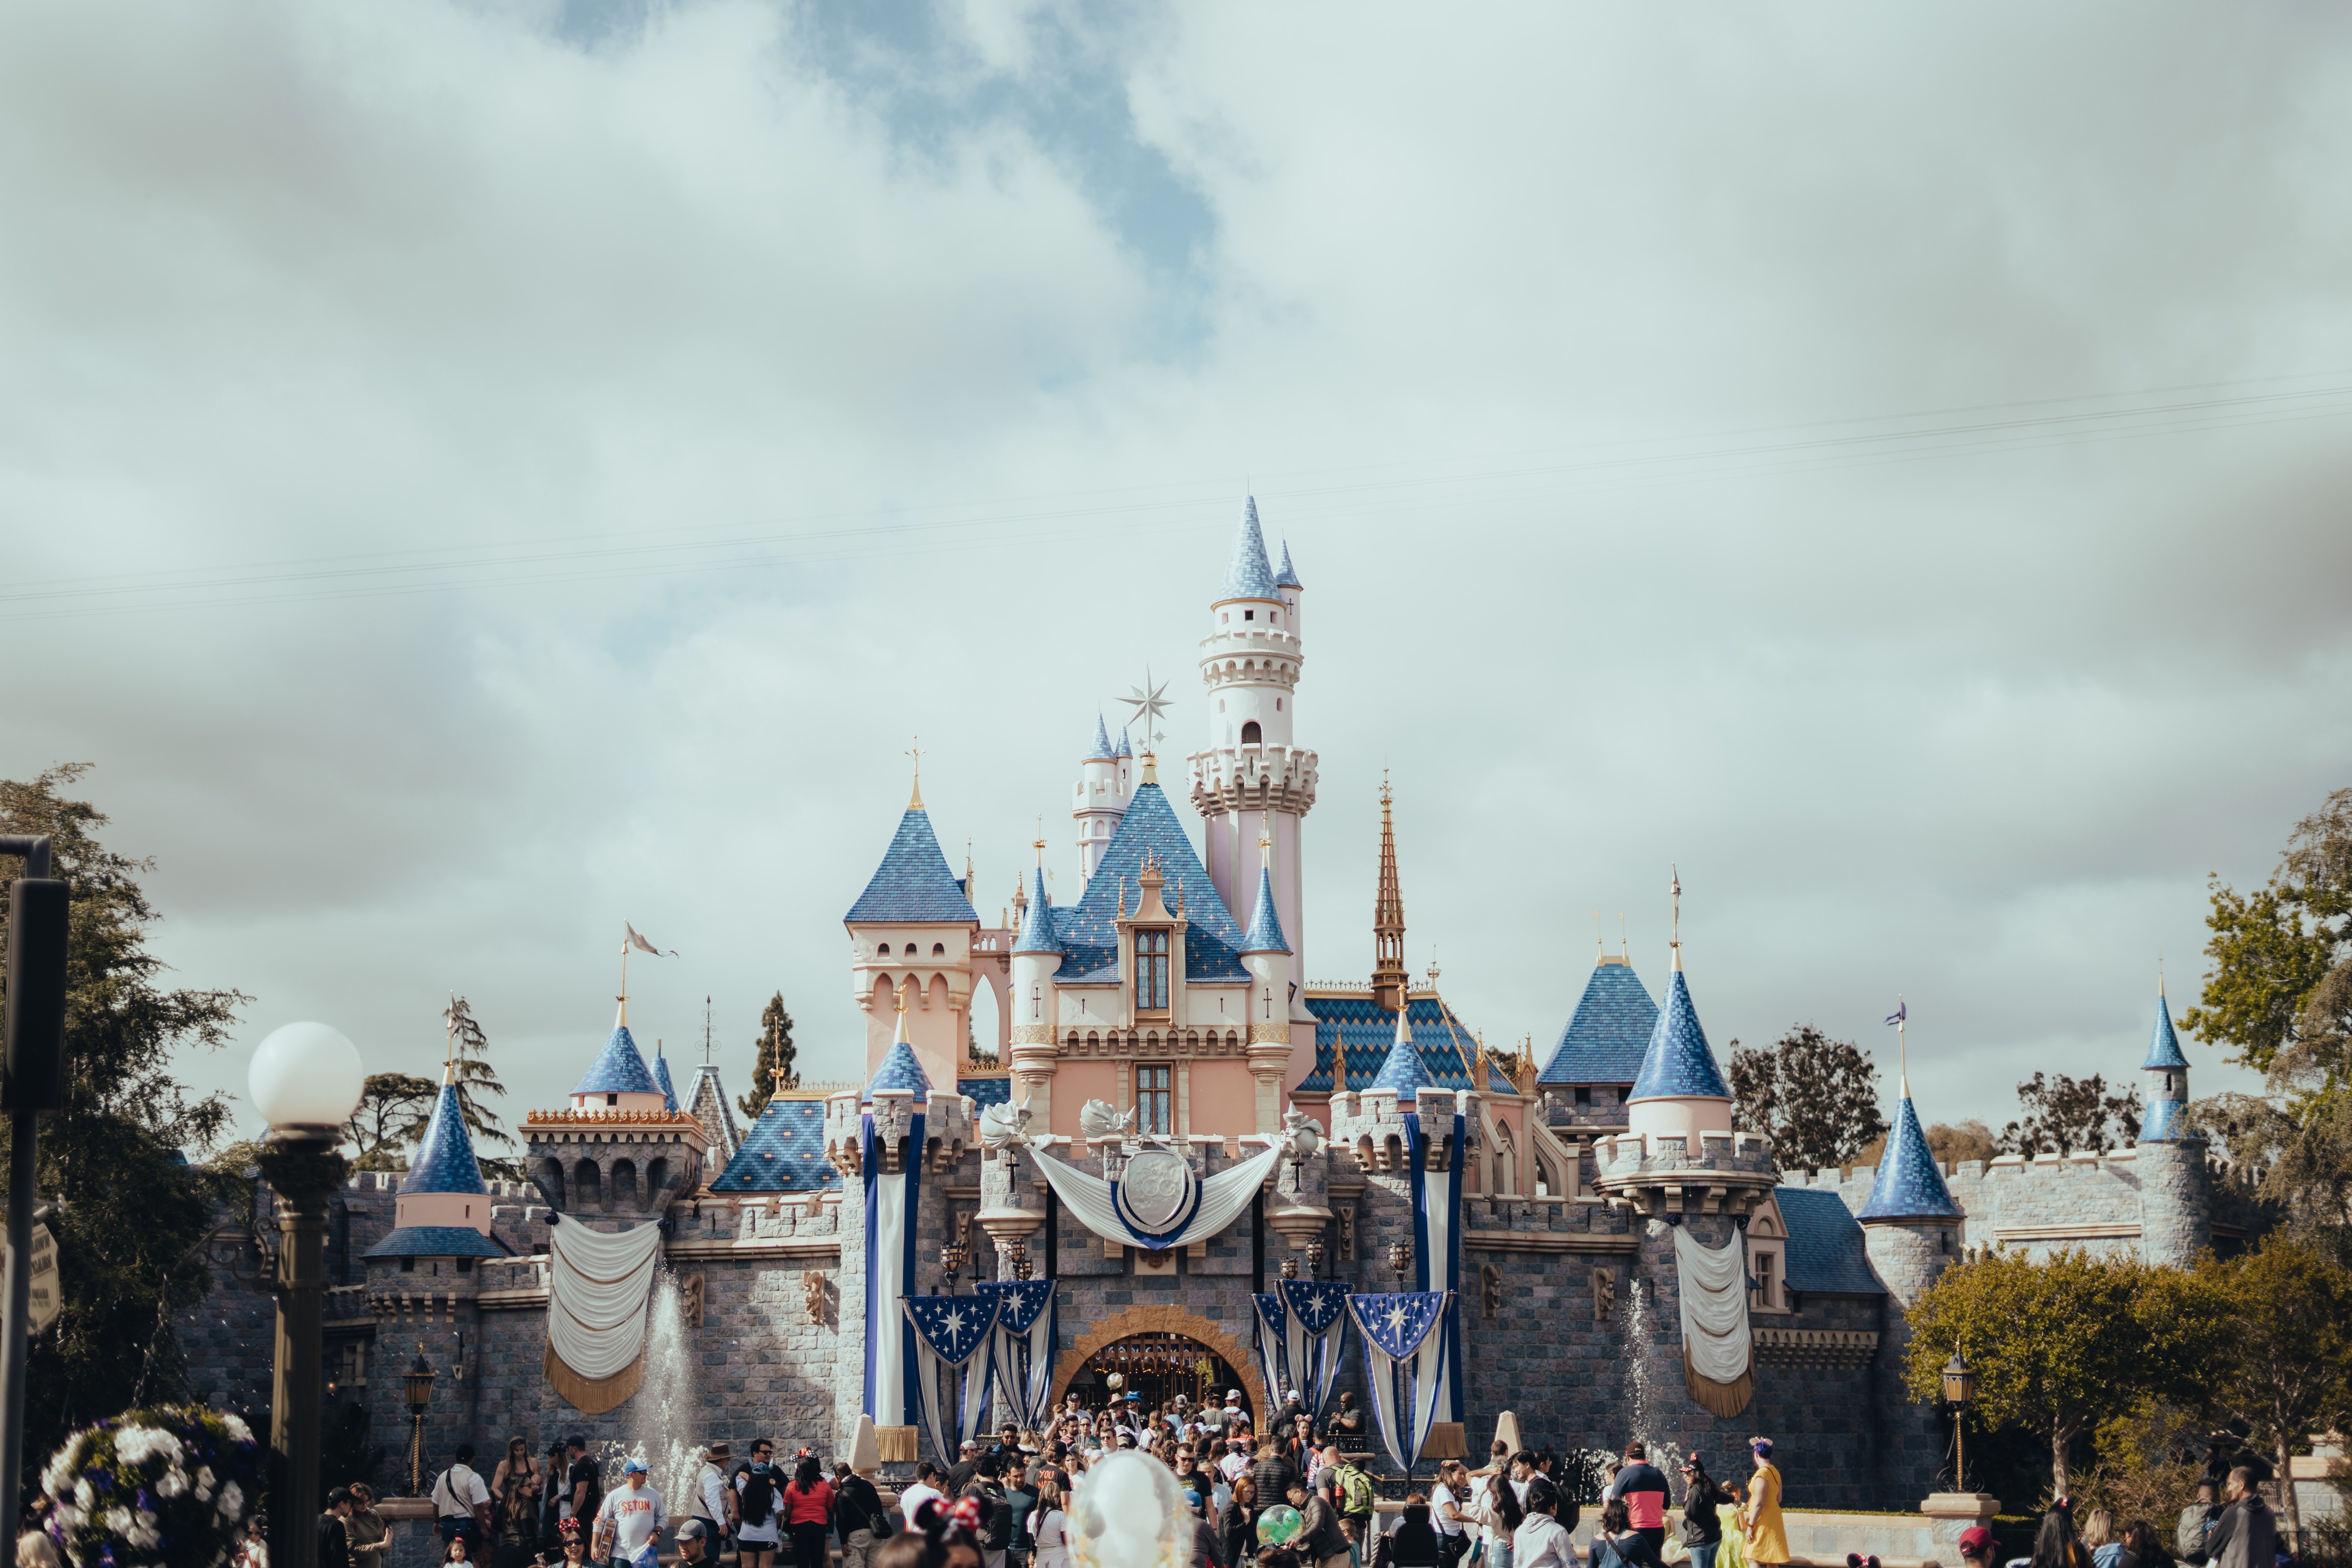 Sleeping Beauty Castle in Disneyland California 